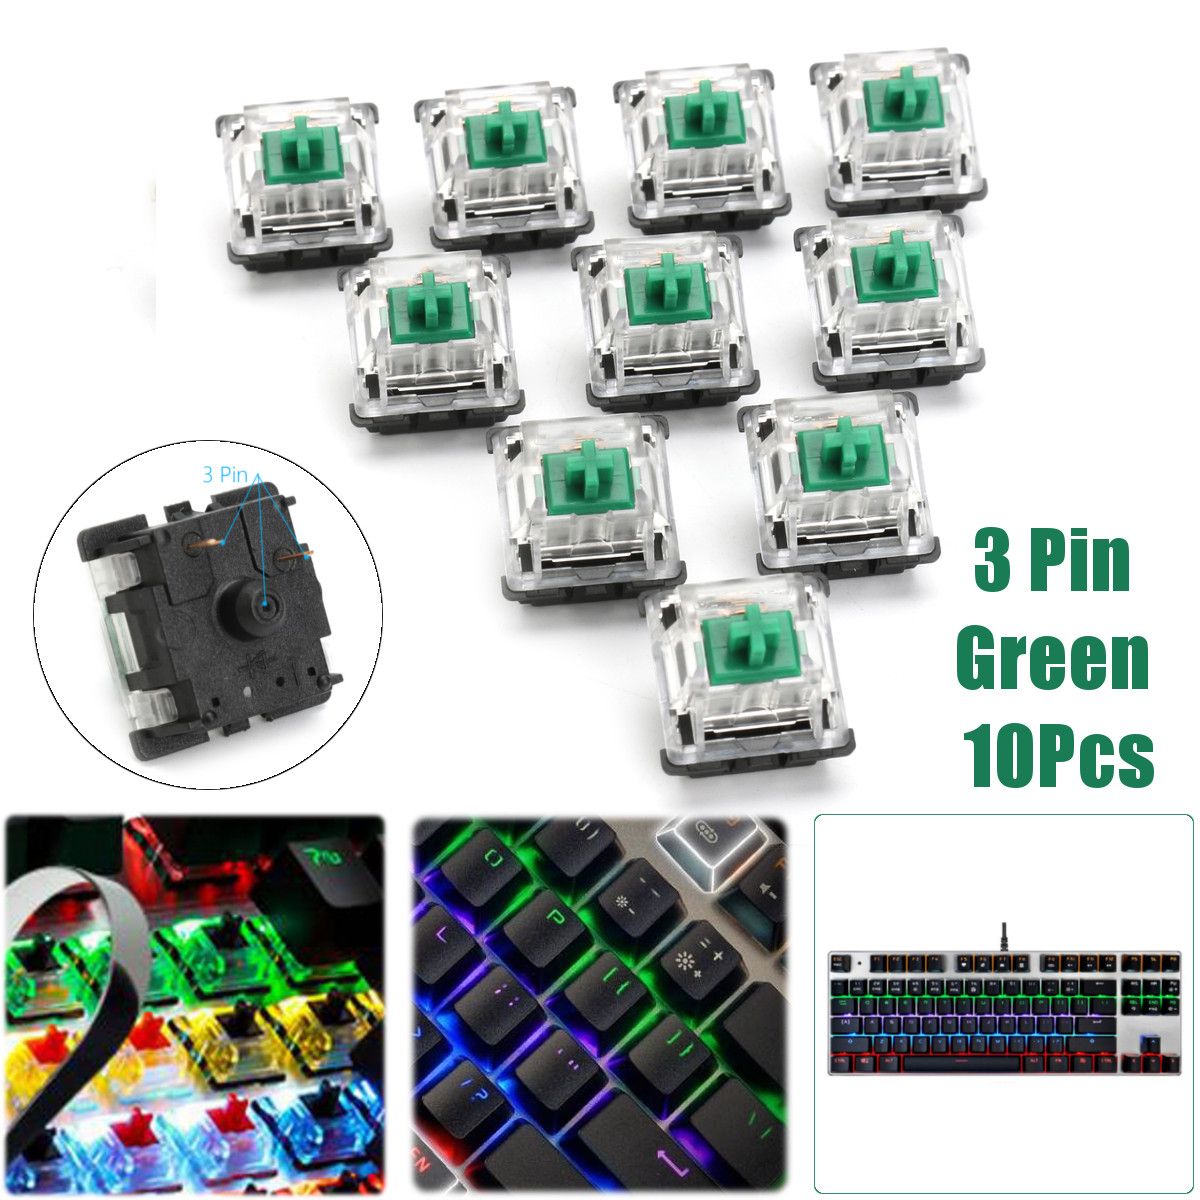 10PCS-3-Pin-Green-Switch-for-Mechanical-Gaming-Keyboard-1173261